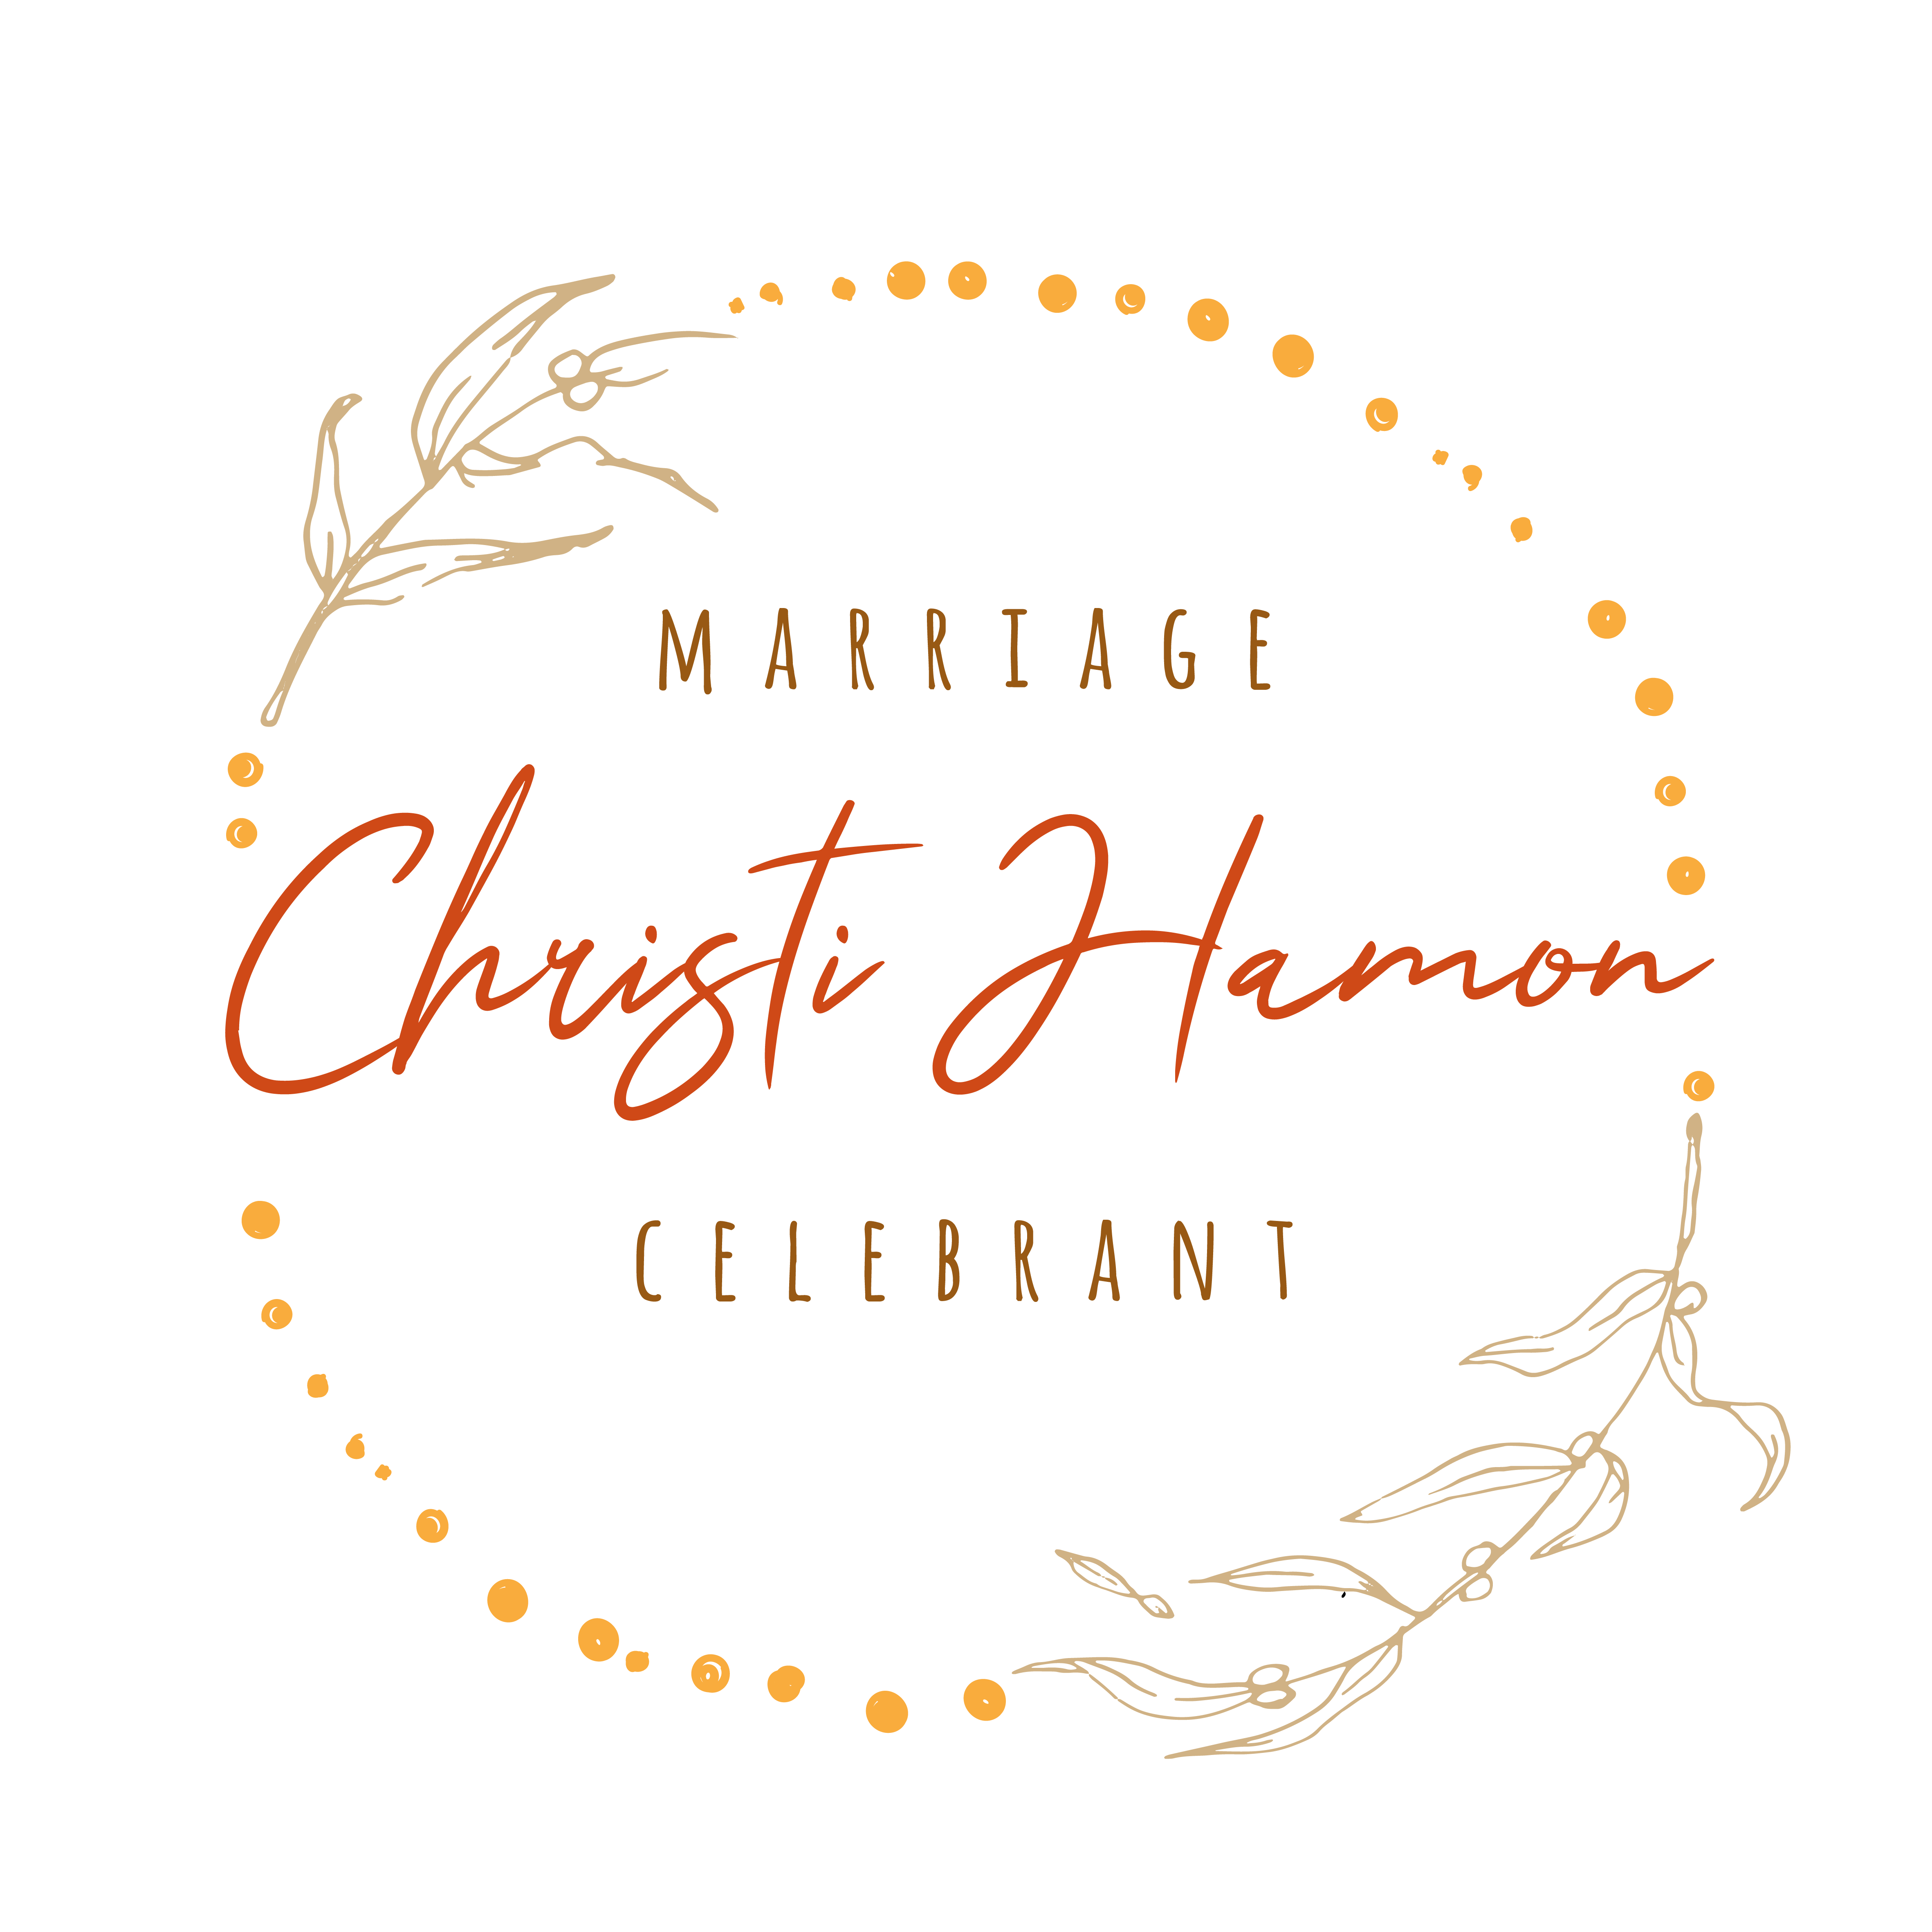 Christi Hamon Marriage Celebrant